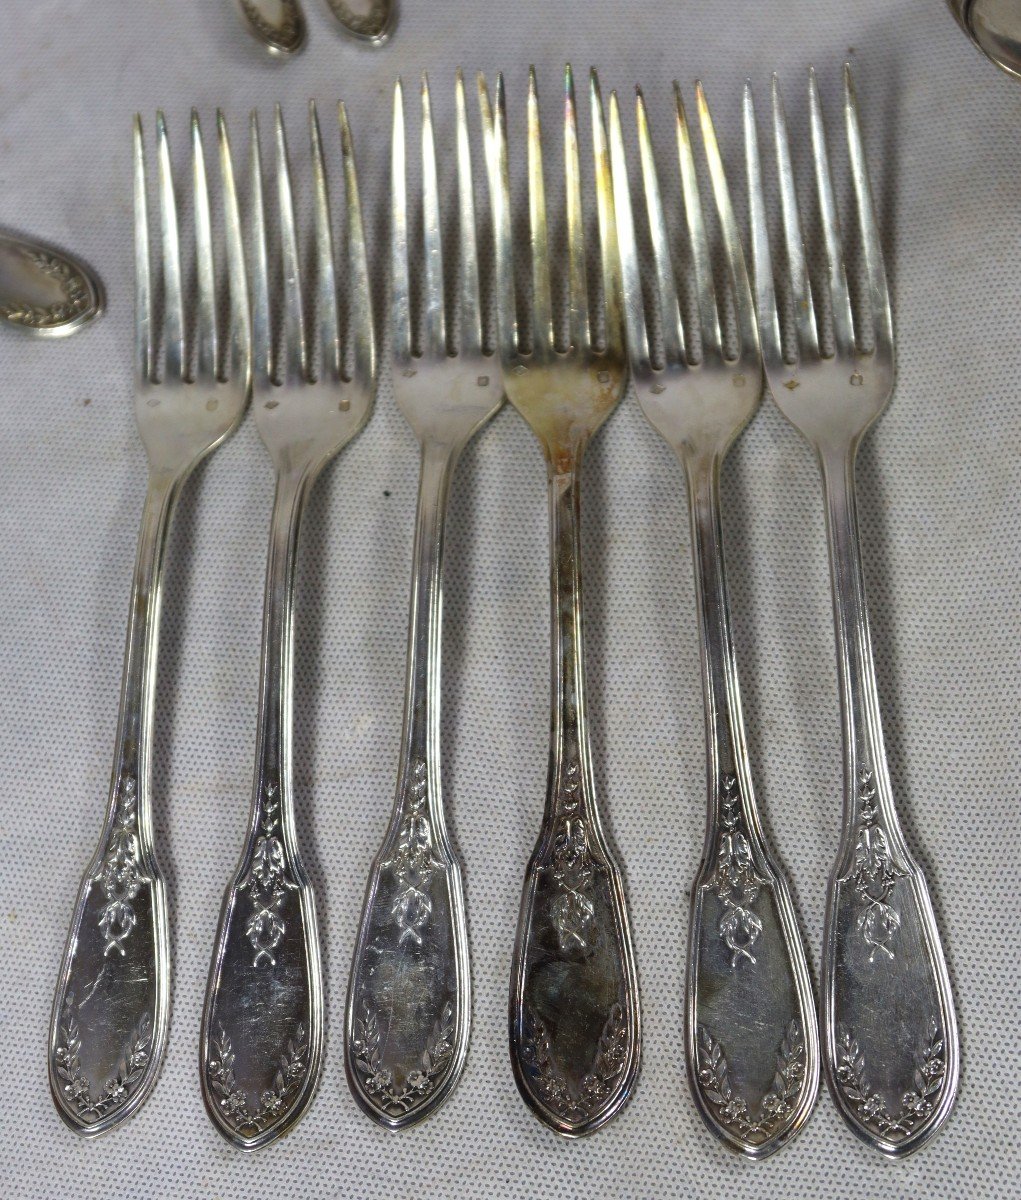 Linzeler Robert Et Cie (1897-1926) Cutlery Service In Sterling Silver, 30 P, Twentieth-photo-2